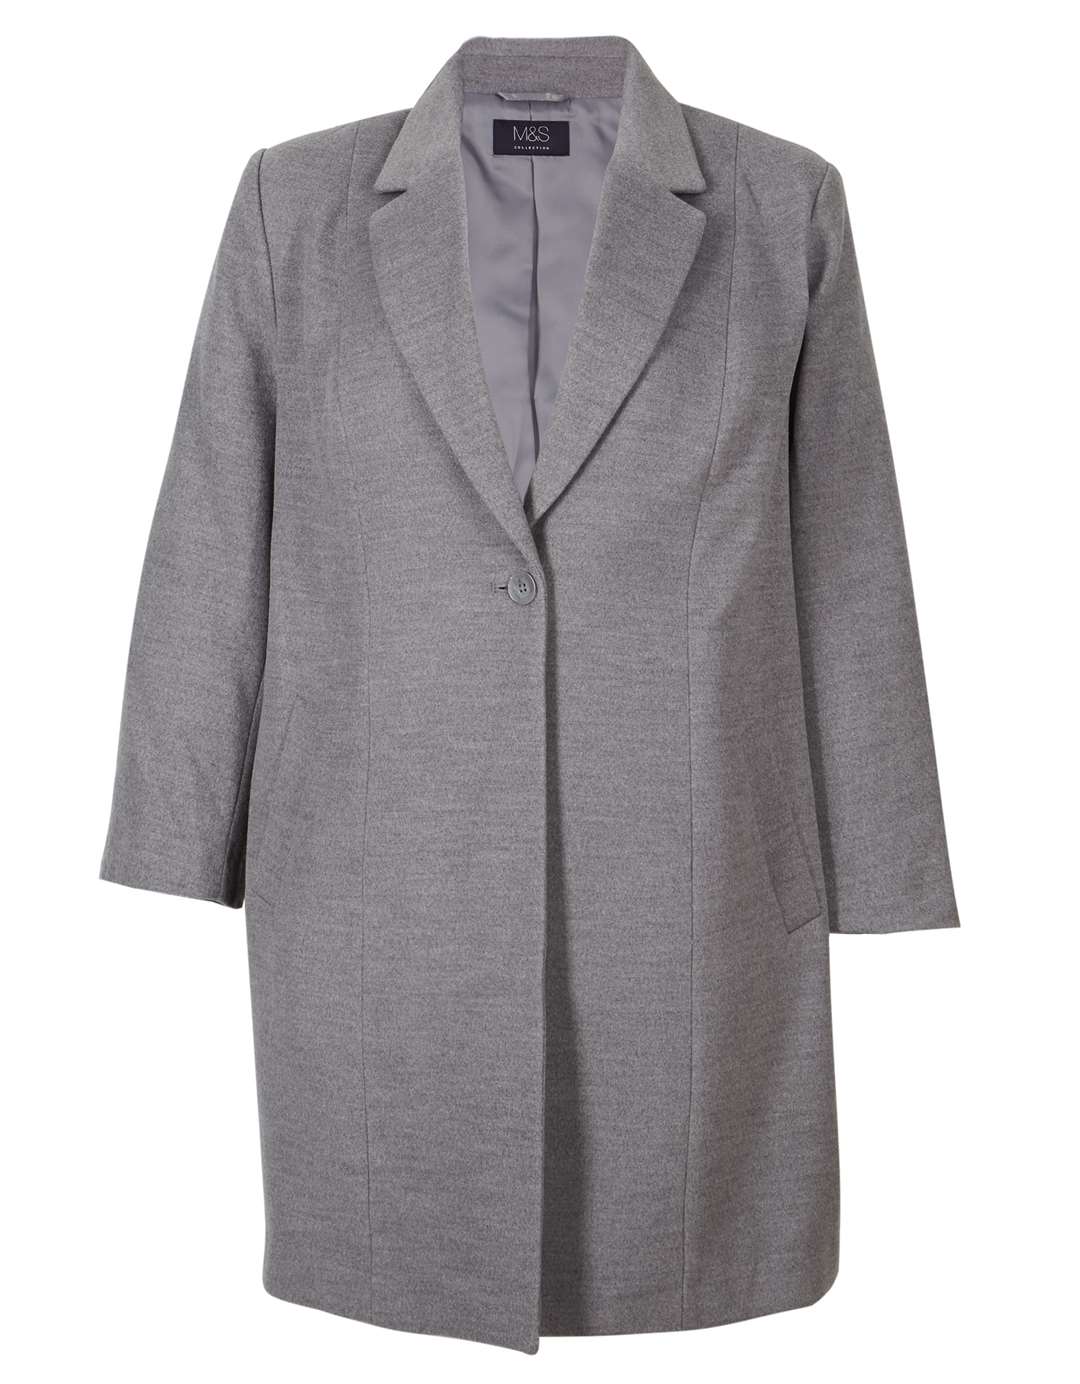 Single button coat, £69